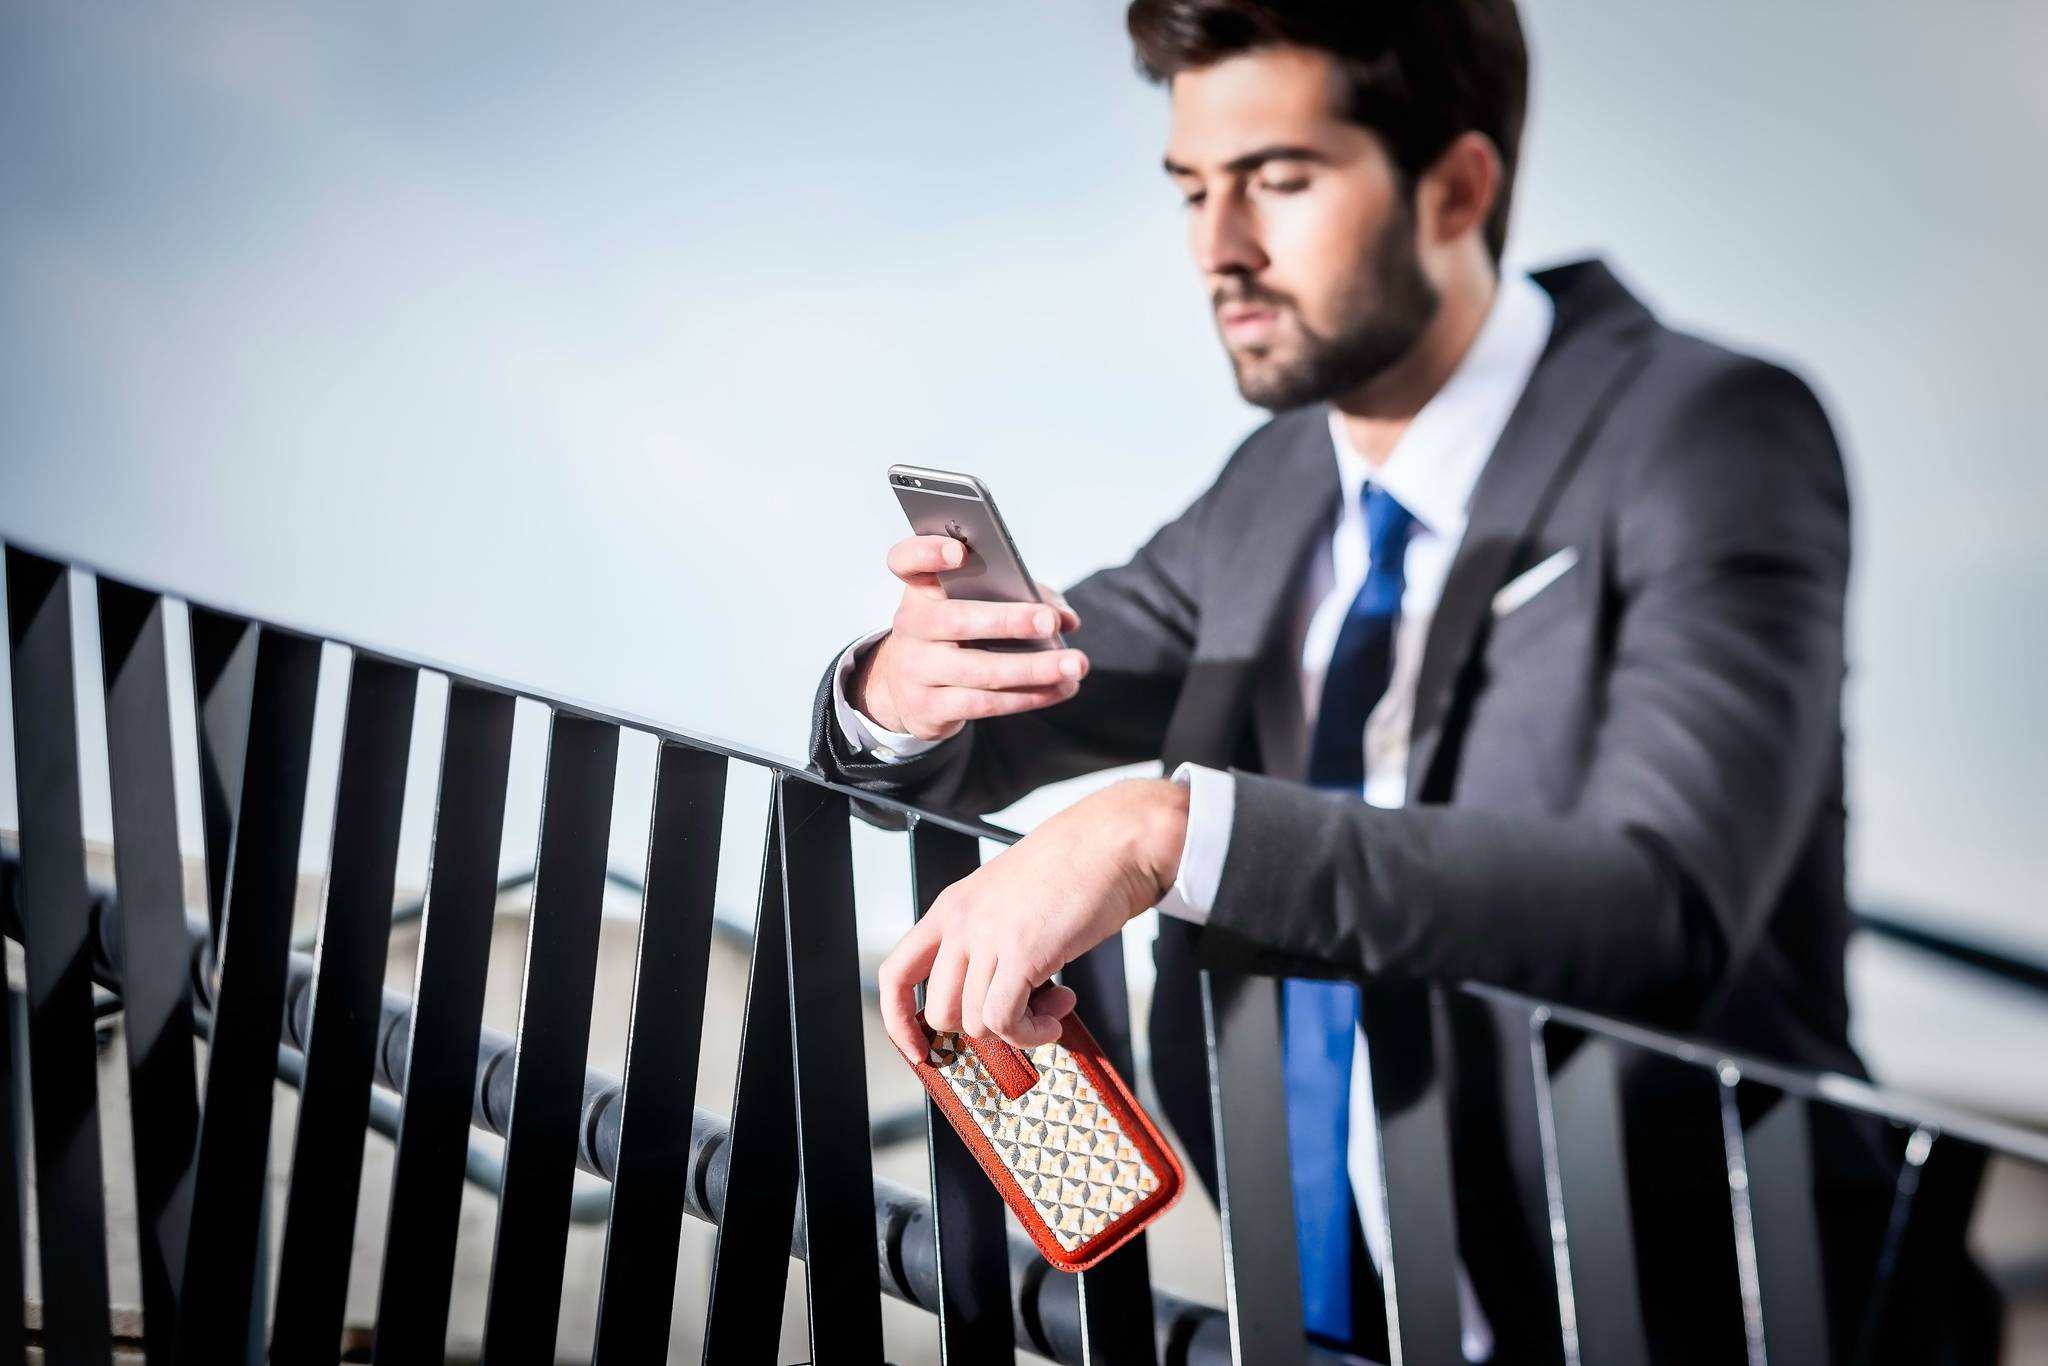 Fake substitute phones help curb smartphone addiction